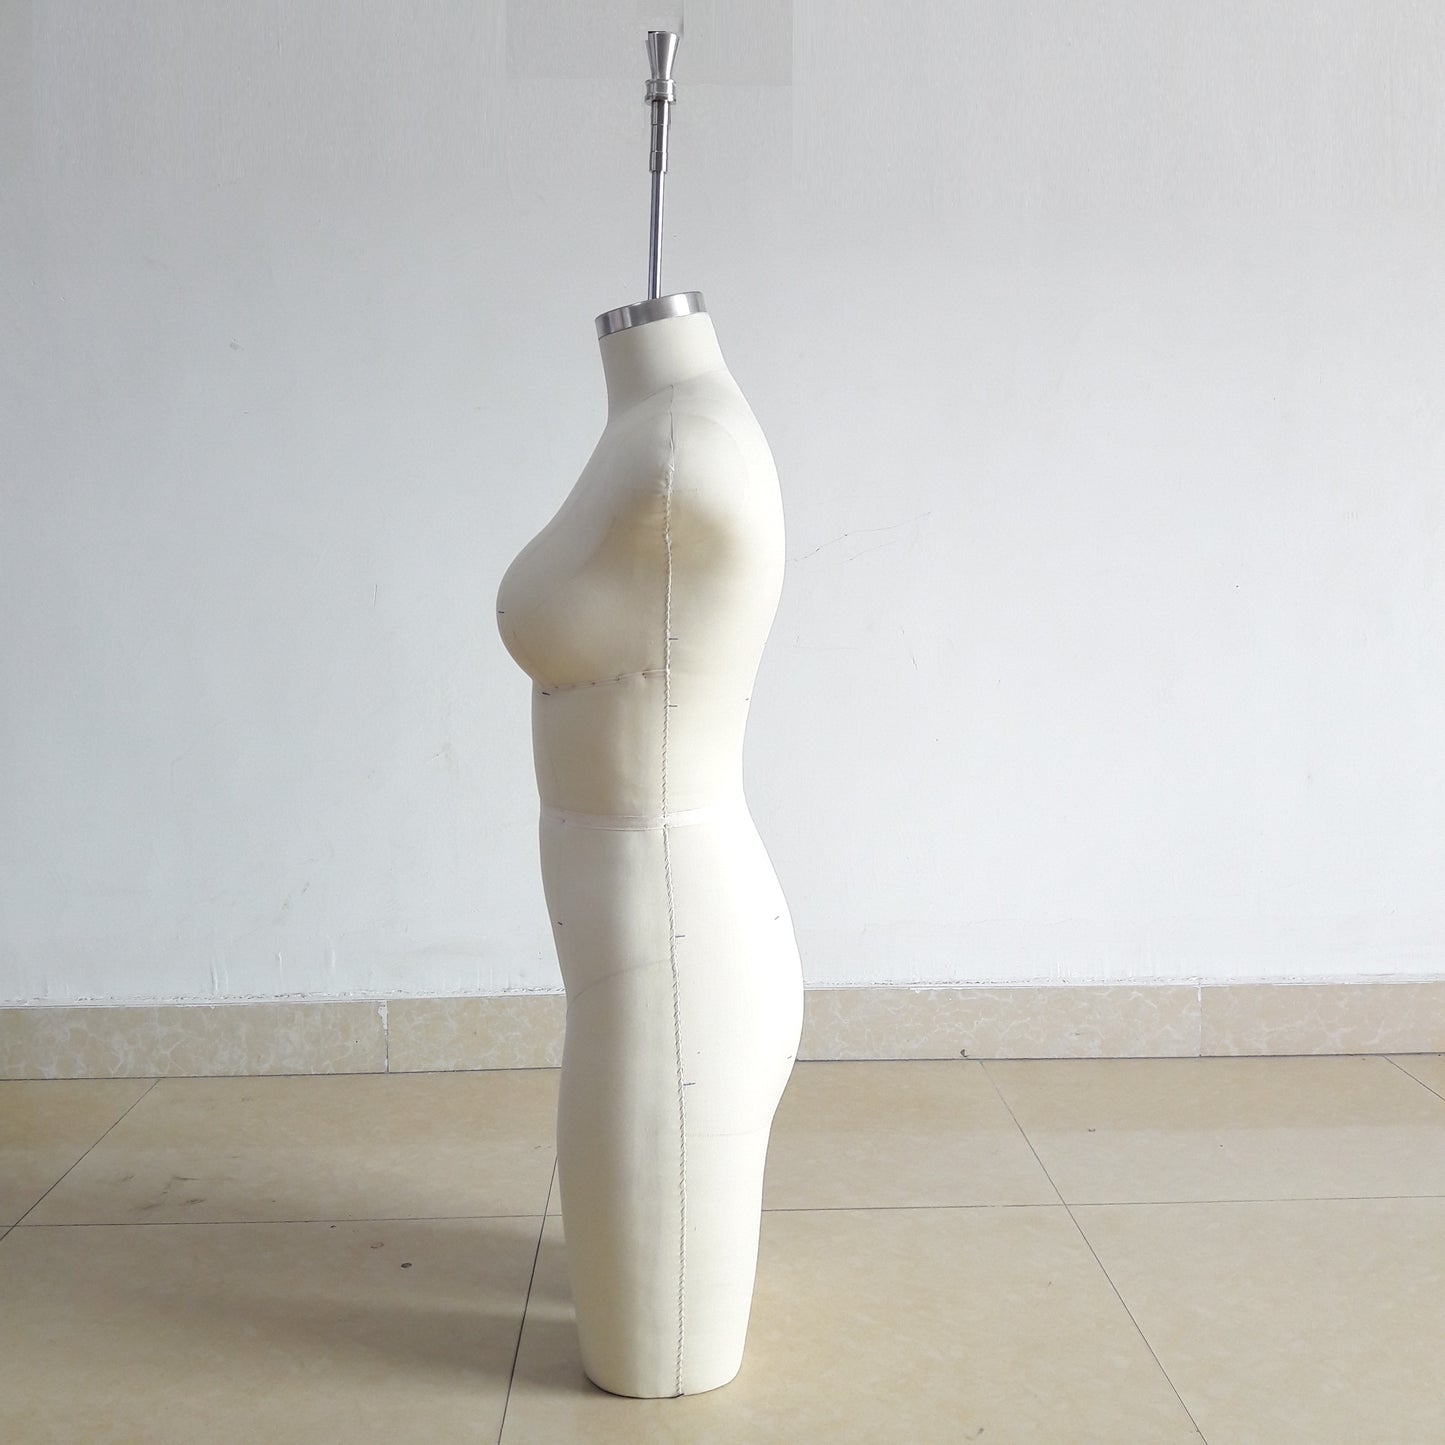 Jelimate Size 36B Lingerie Mannequin Torso Female Dress Form For Sewin –  JELIMATE